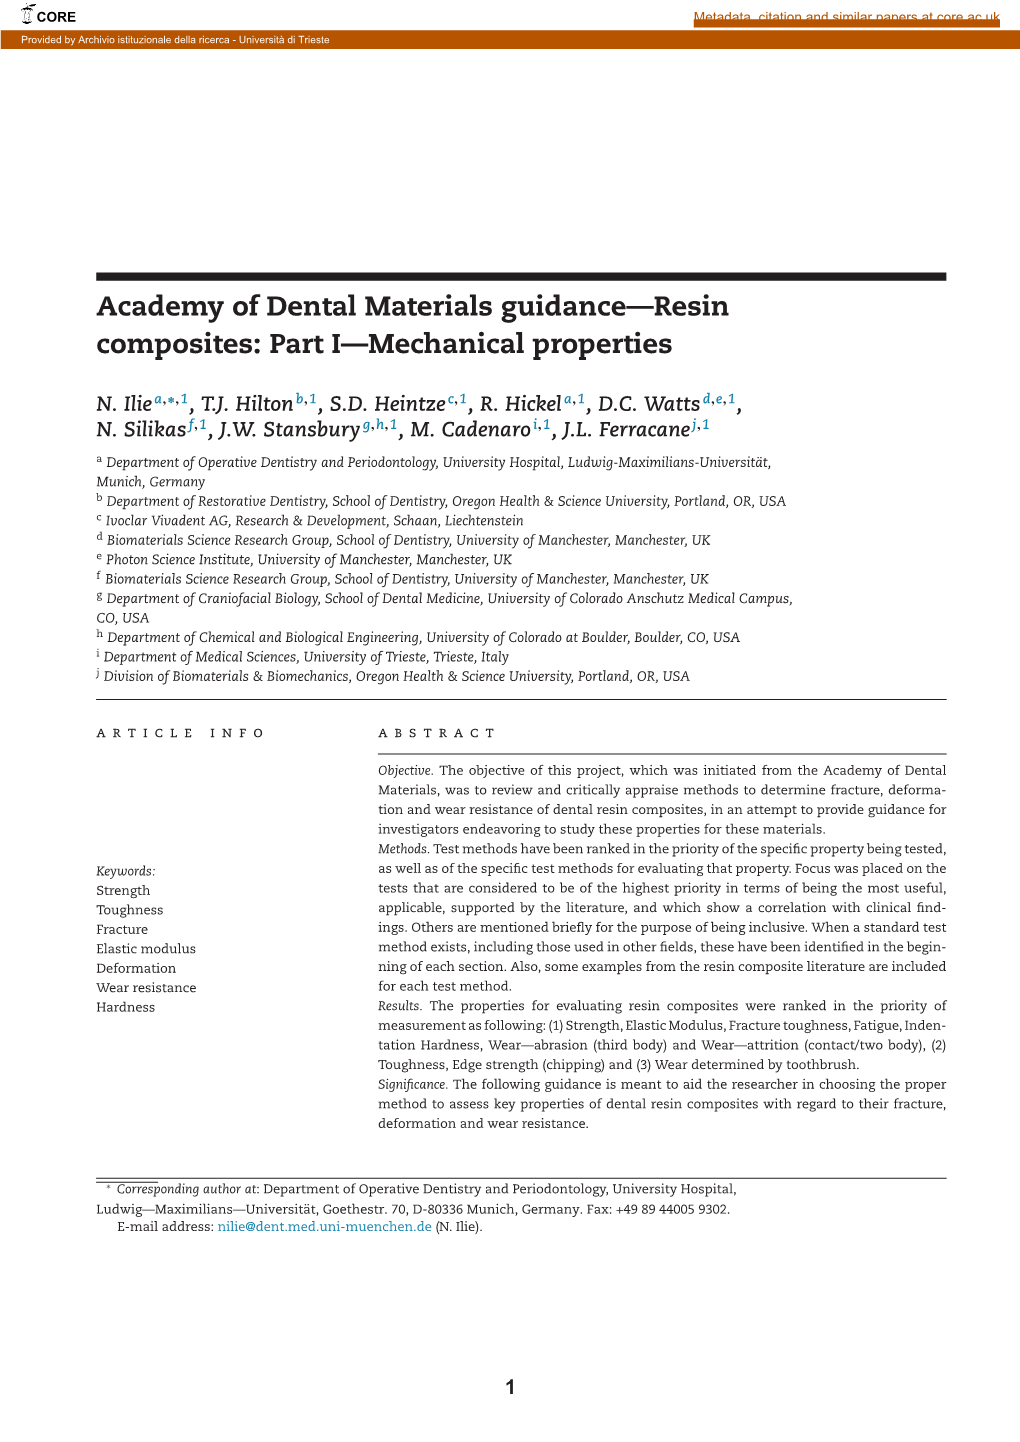 Academy of Dental Materials Guidance—Resin Composites: Part I—Mechanical Properties